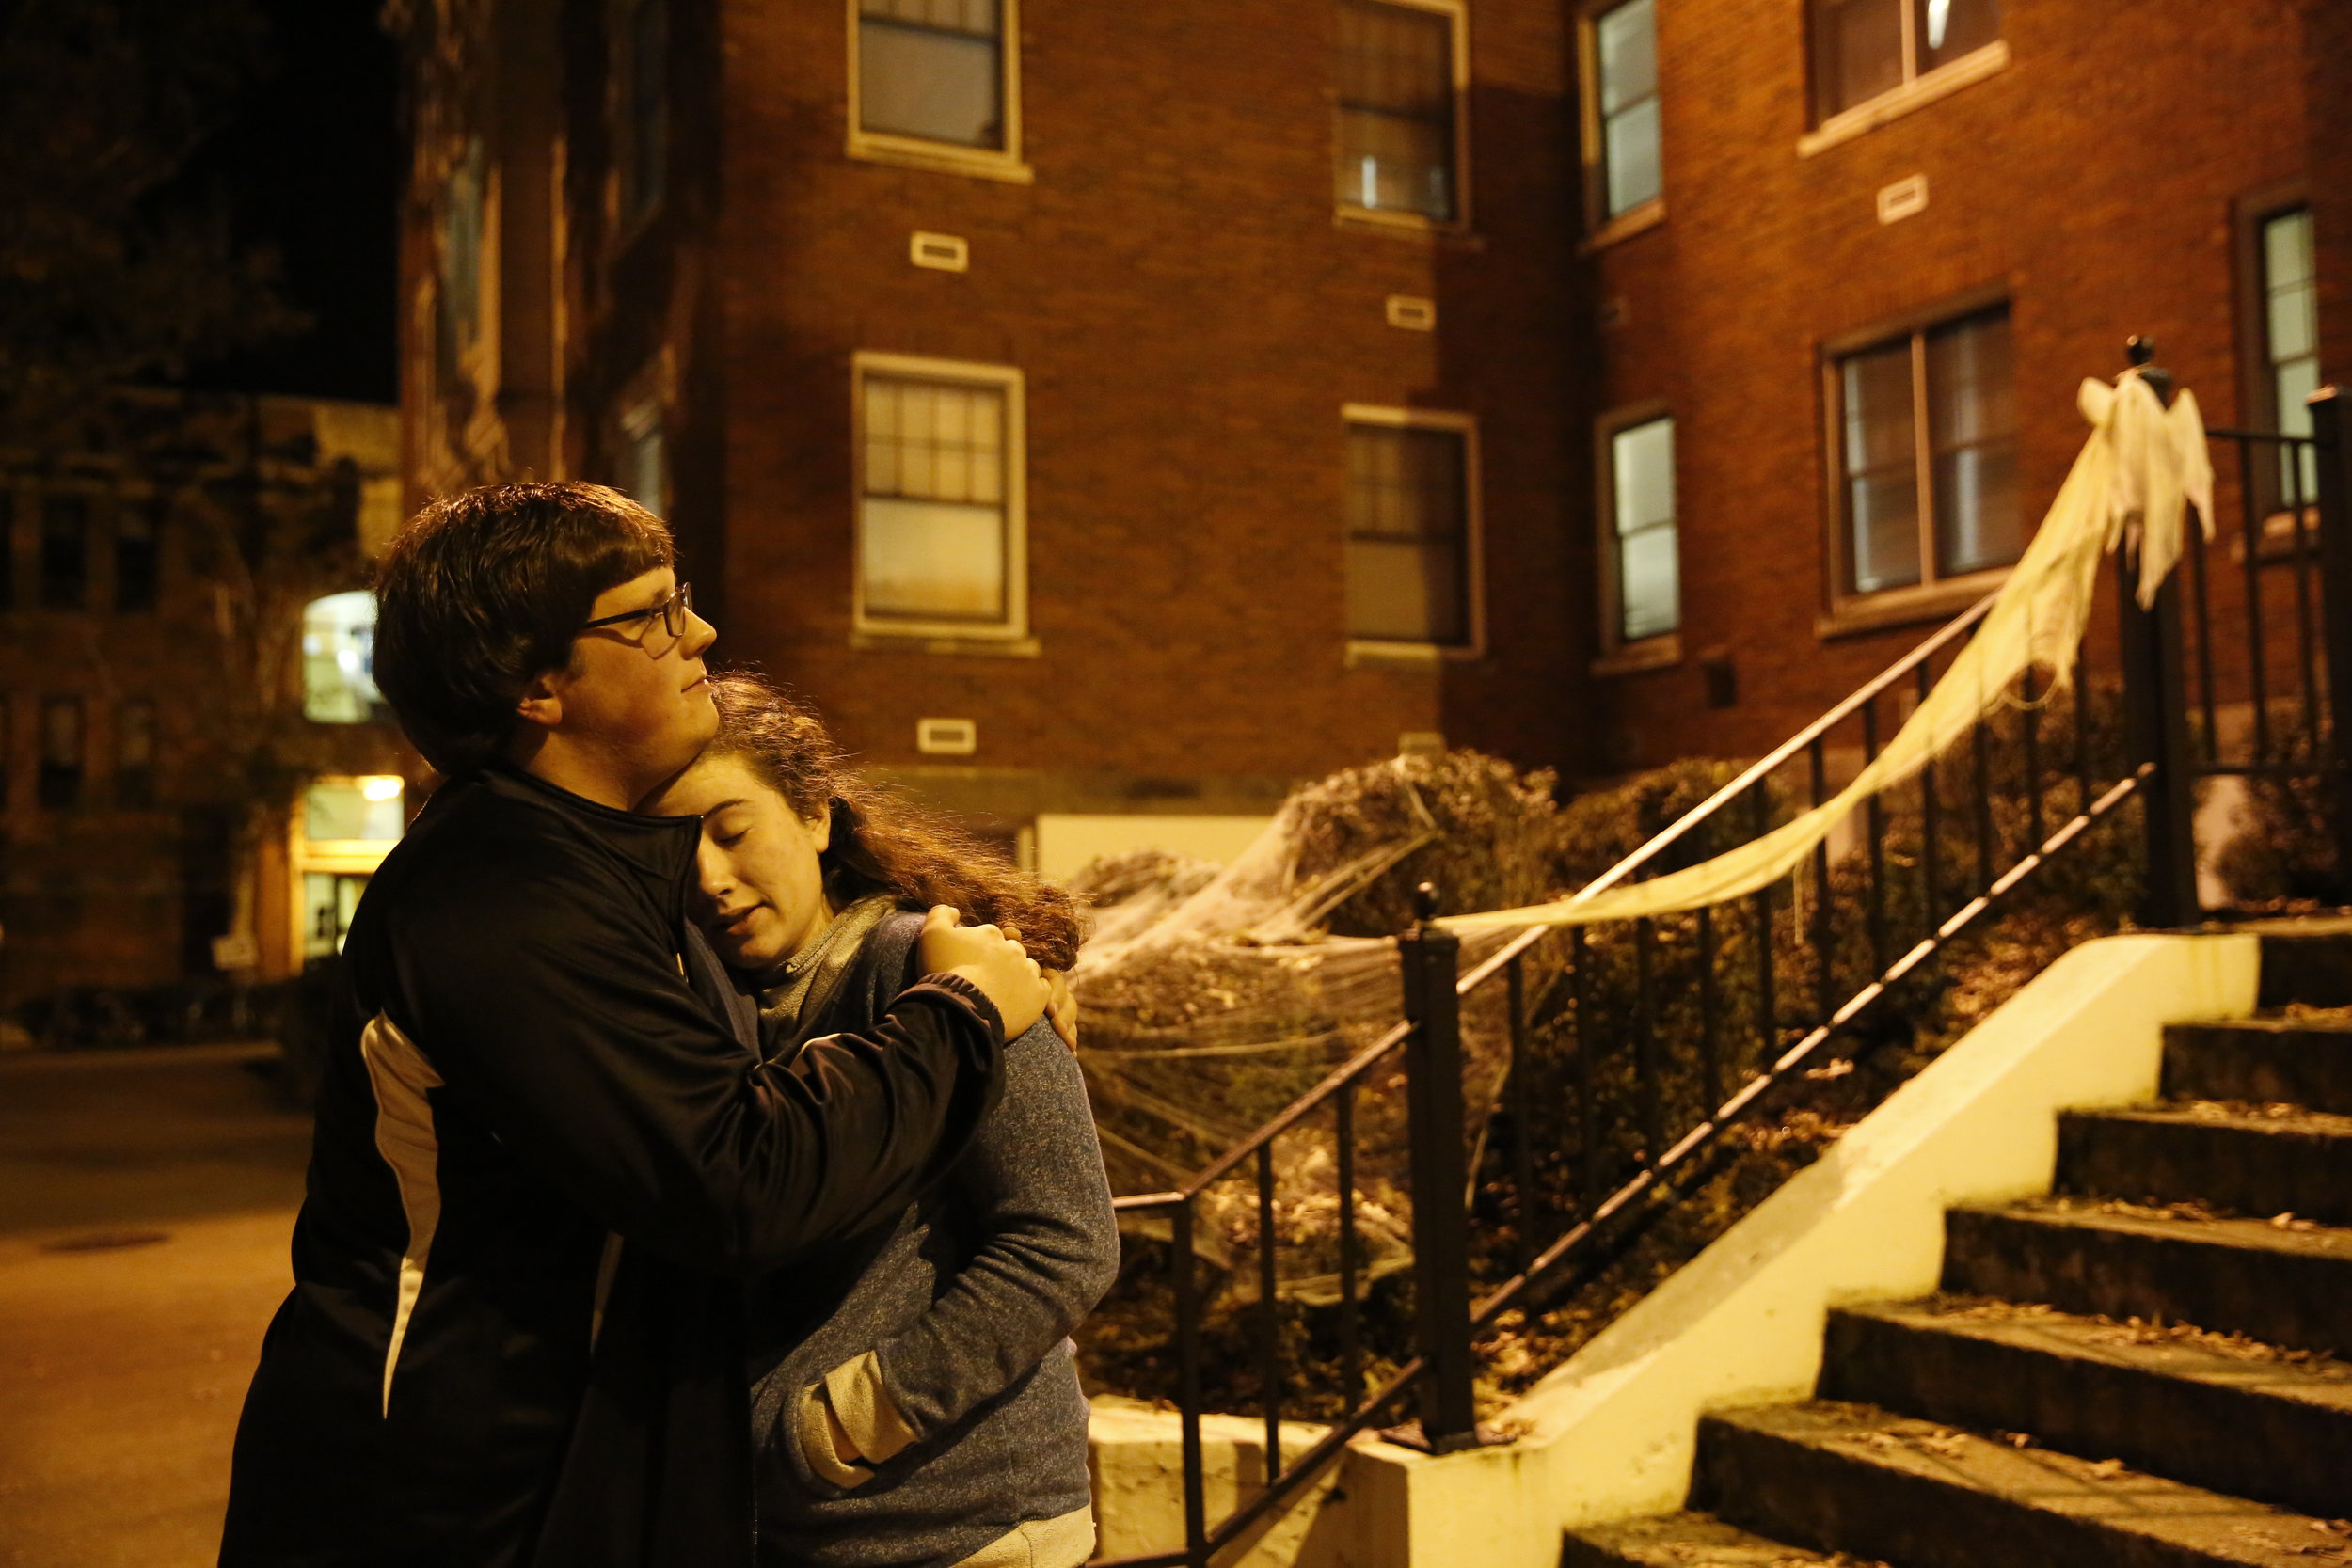  Grace receives a comforting hug from boyfriend, John Kincaid (J.D.), after a stressful day.&nbsp;    